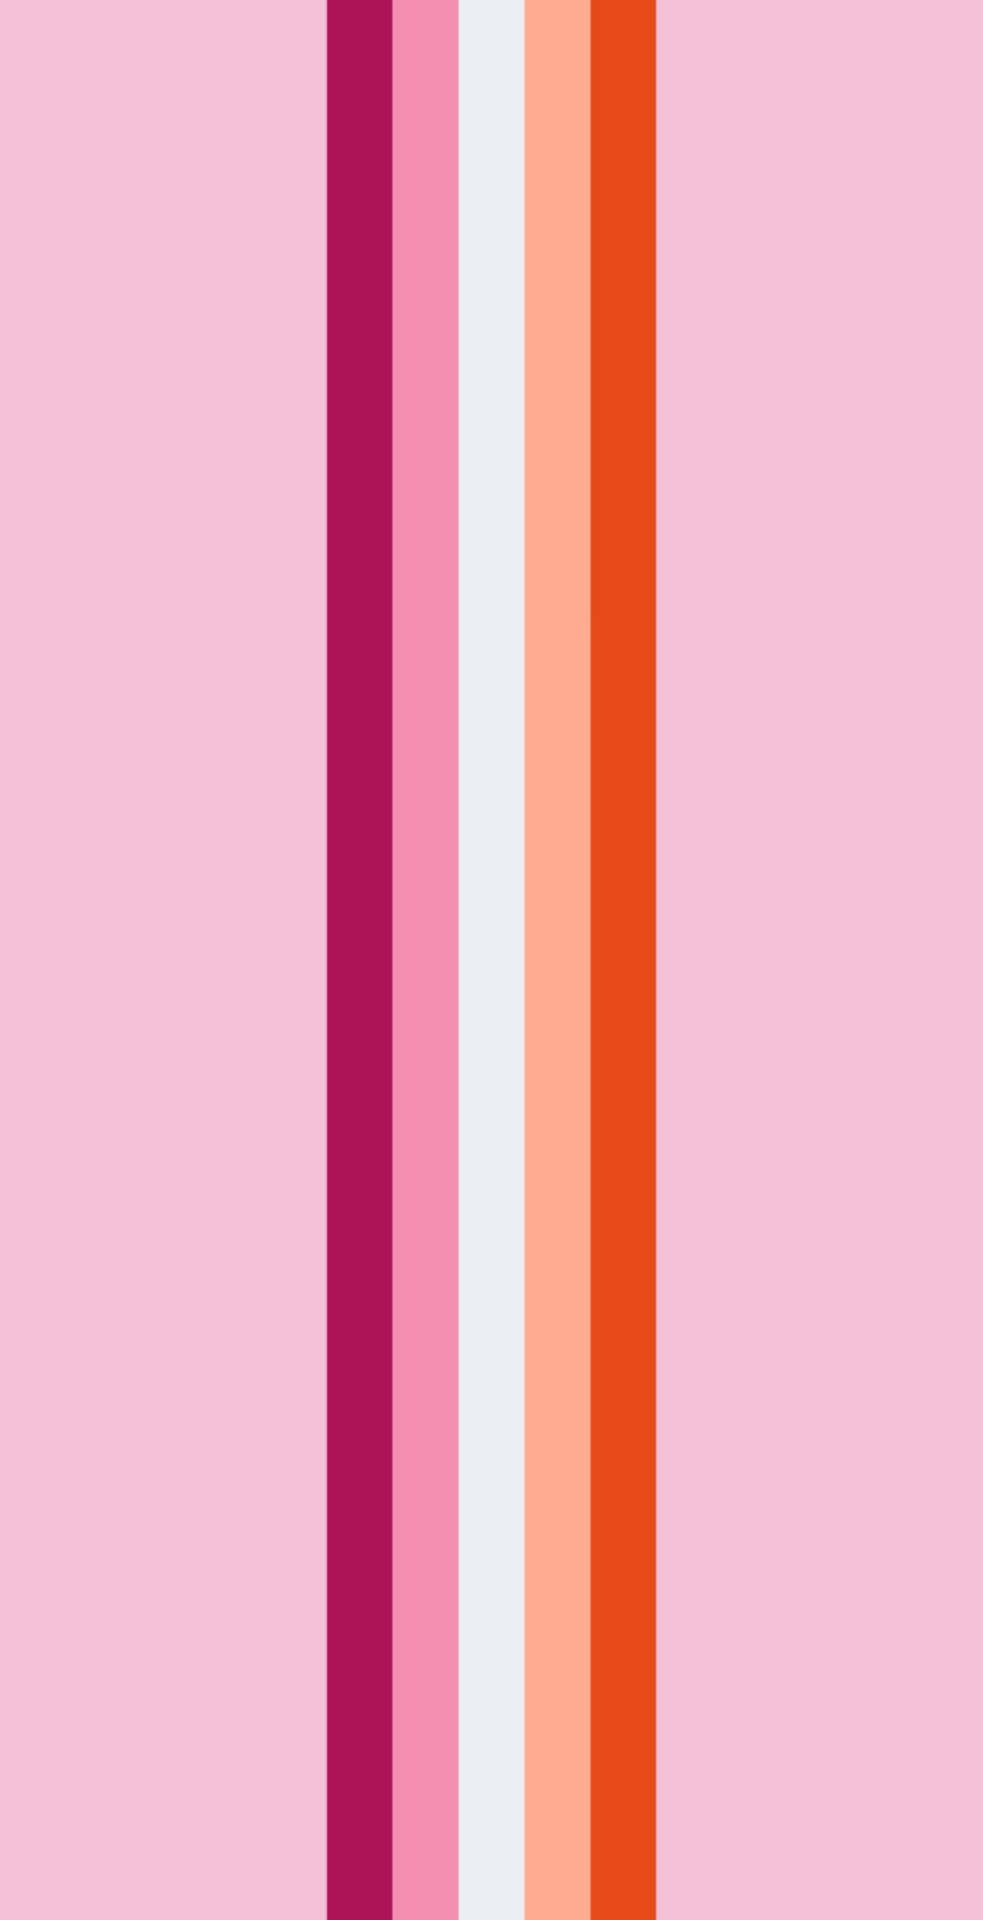 Lesbian Flag In Pink